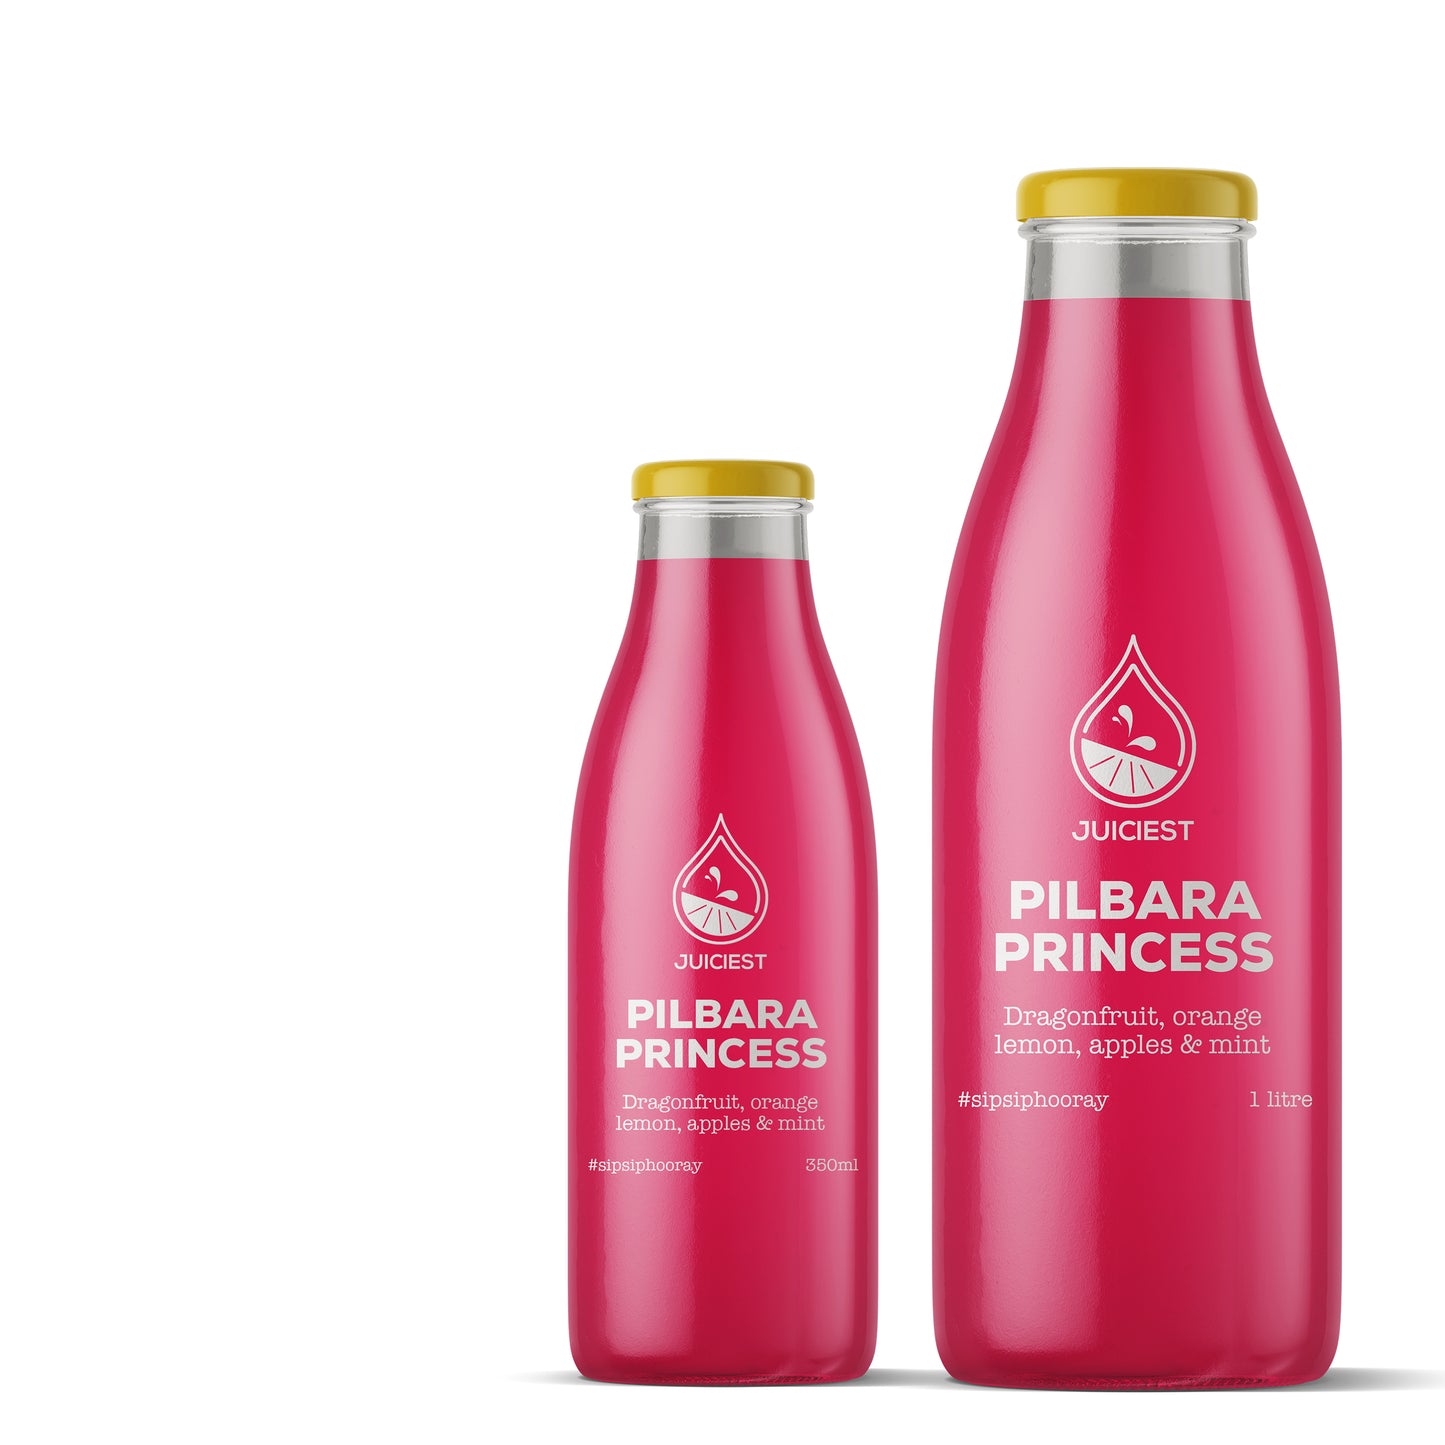 Juiciest Pilbara Princess 350ml and 1L bottles